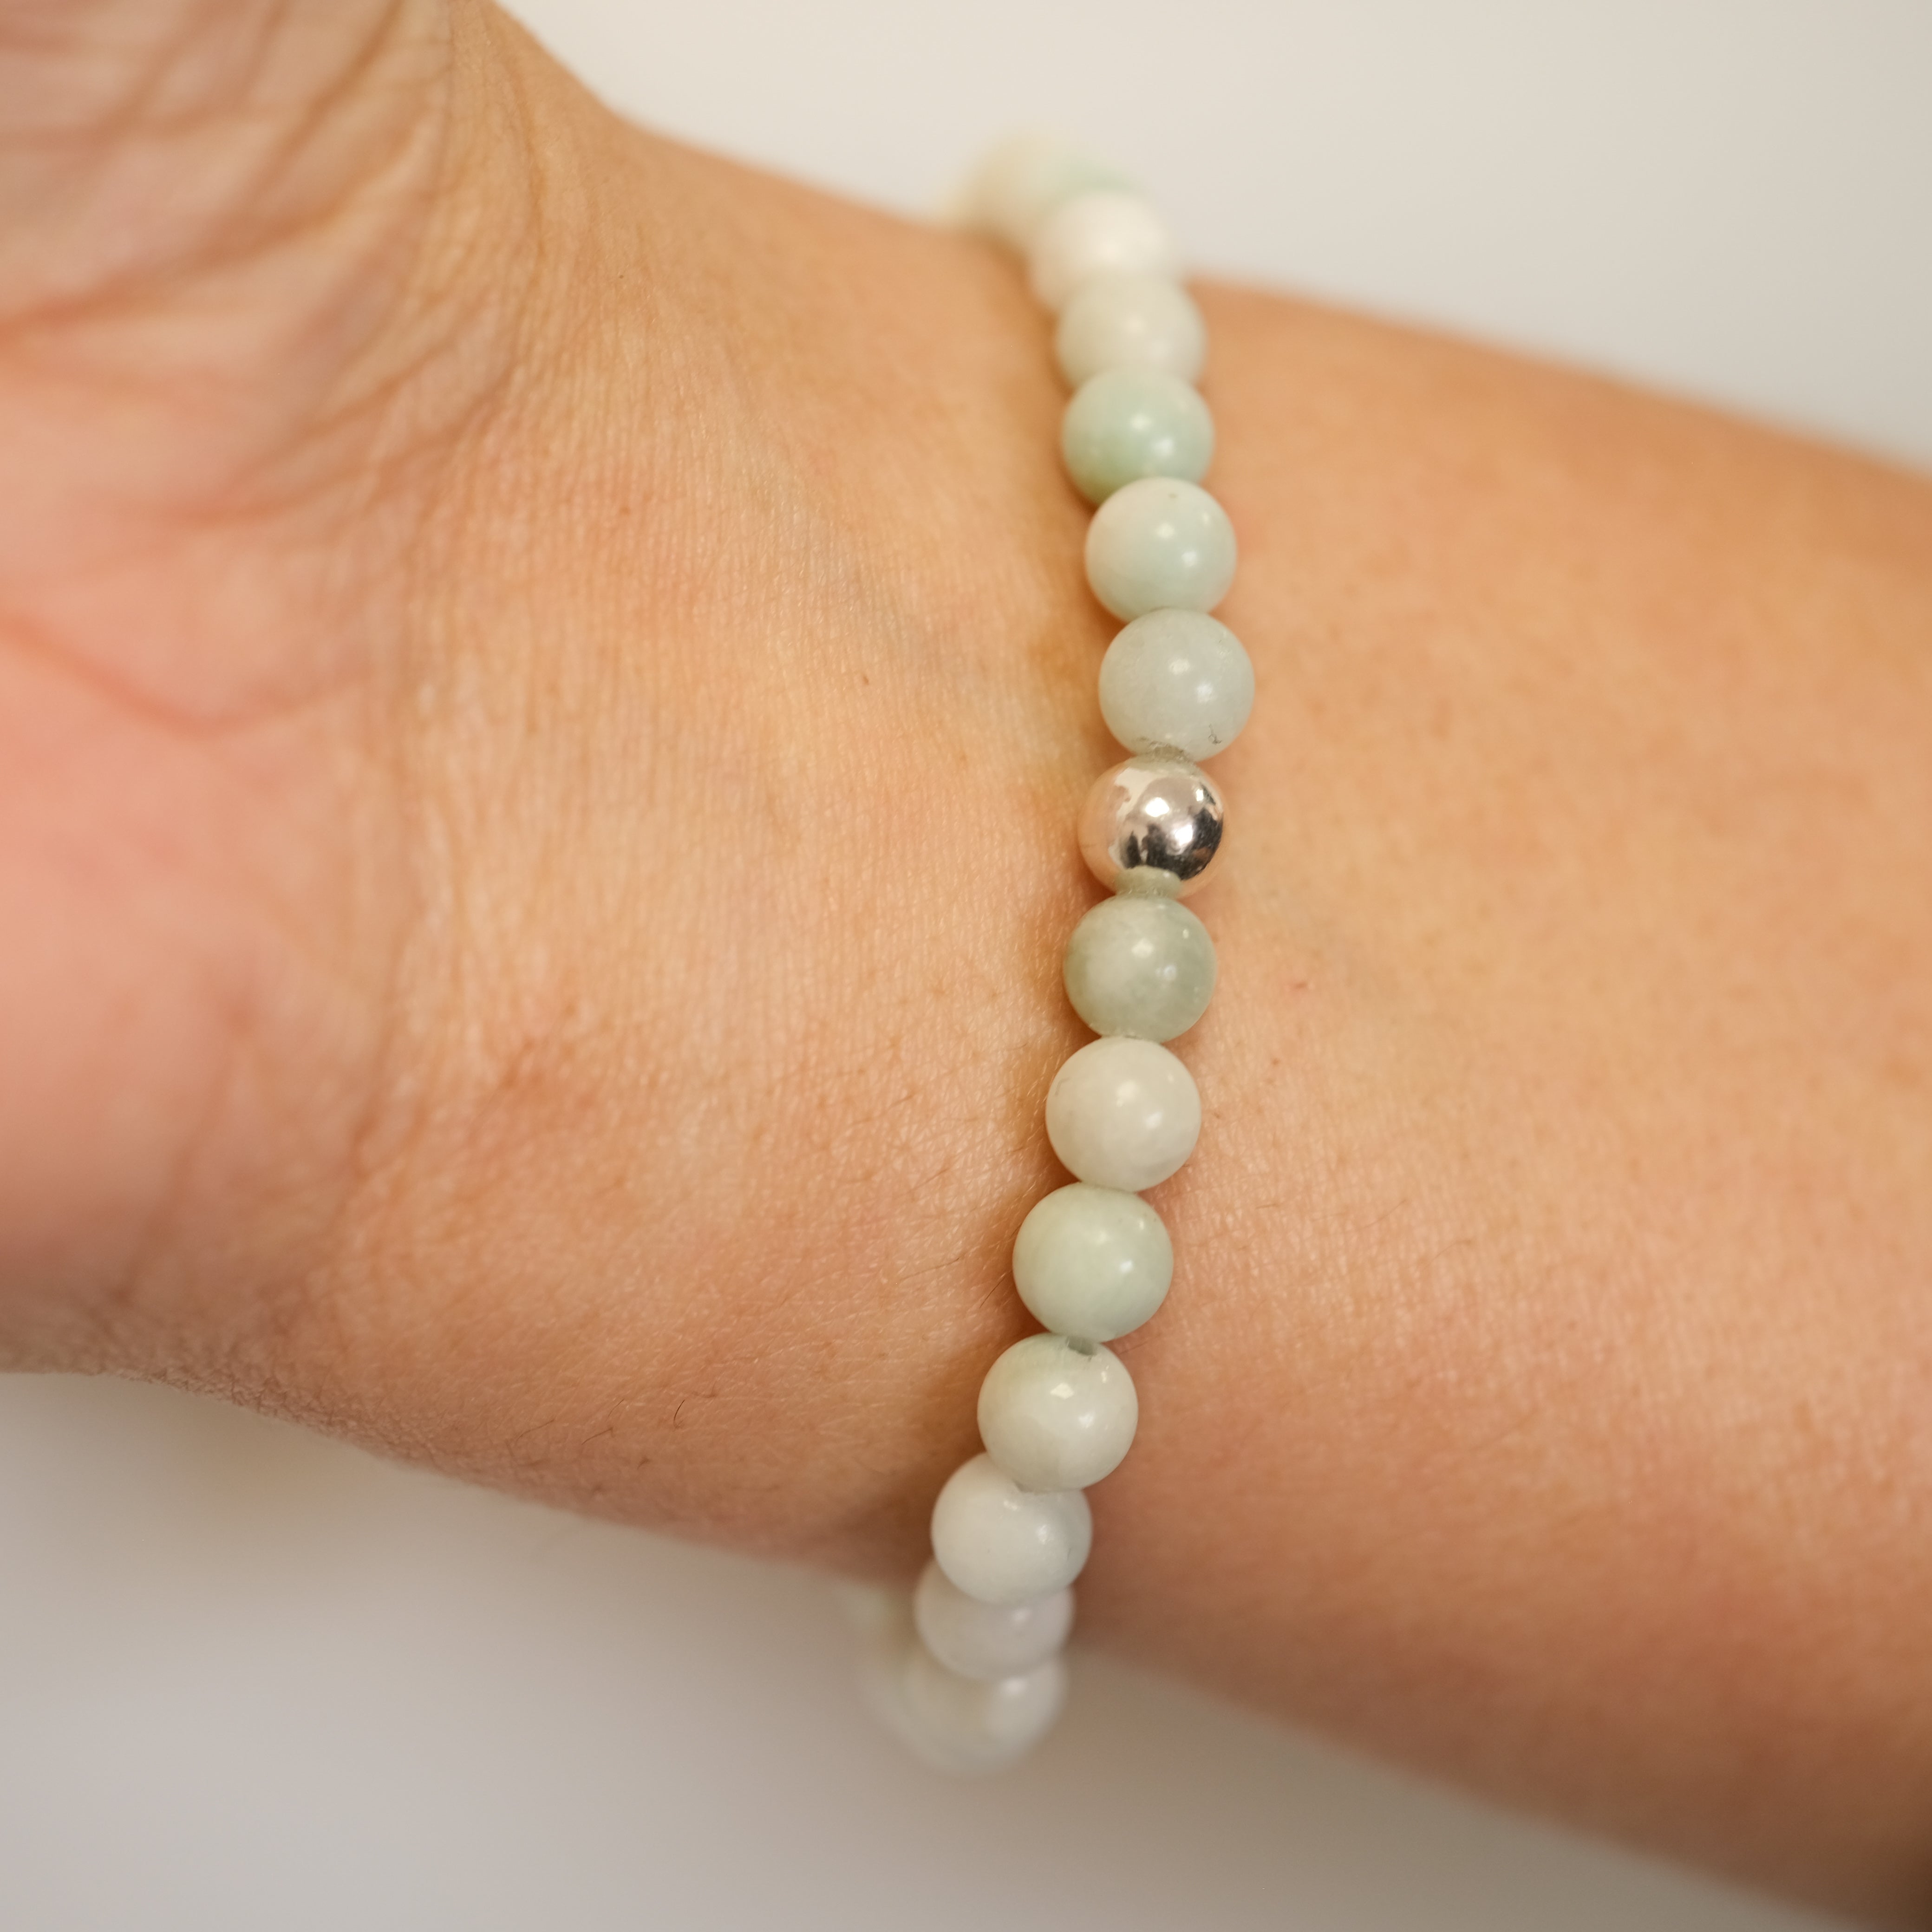 A Larimar gemstone bracelet worn on a model's wrist from behind